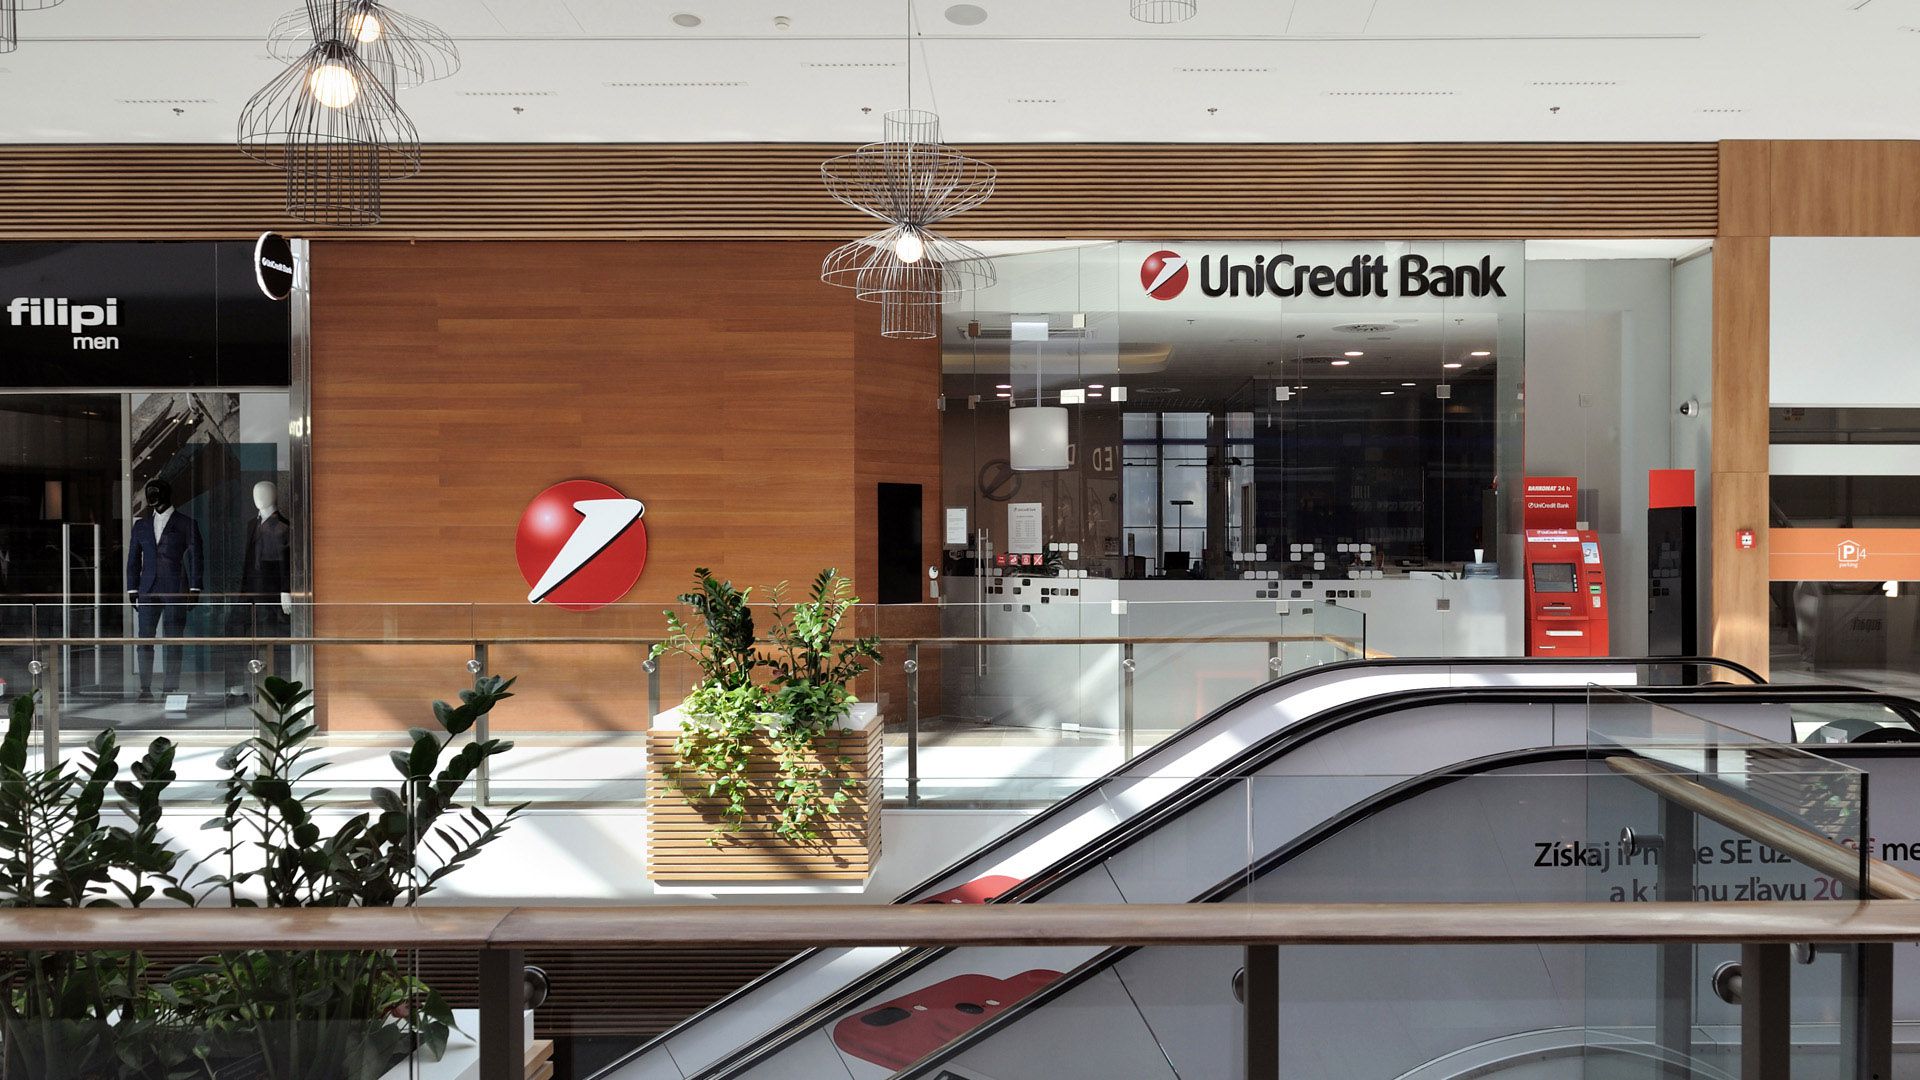 Dizajn interiéru UniCredit bank